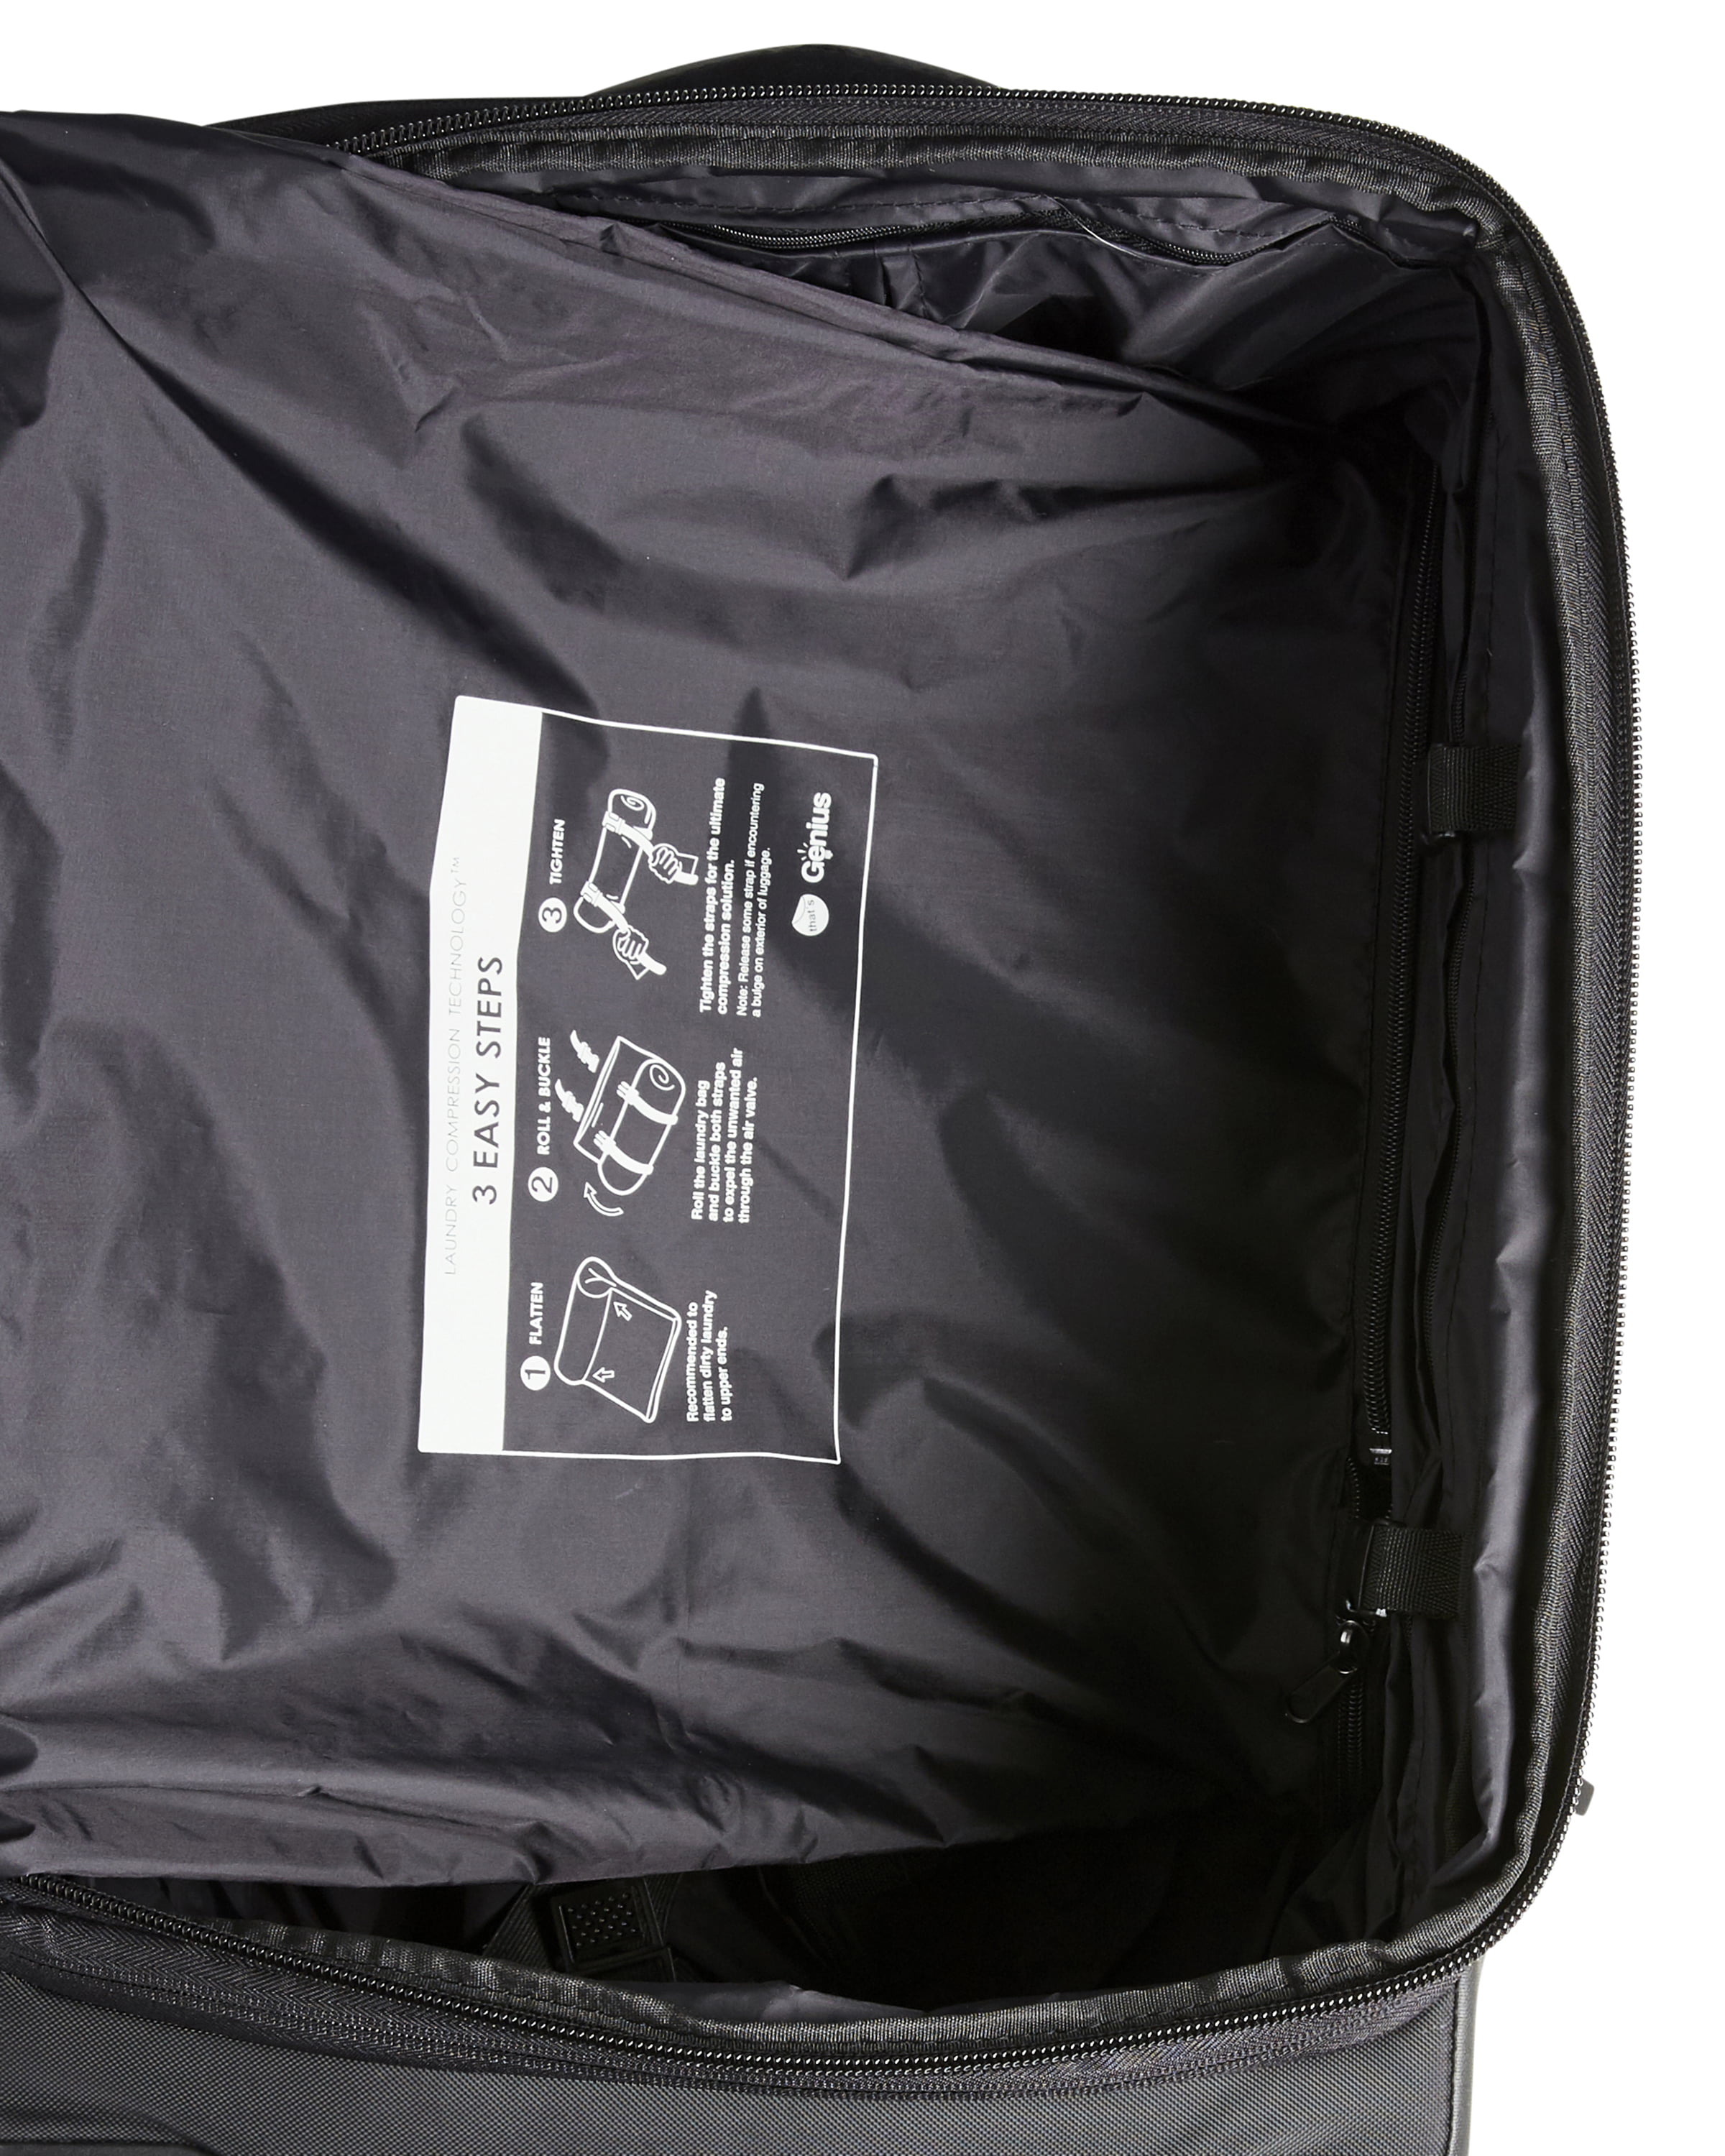 Bag with logo by Moncler Genius | Tessabit